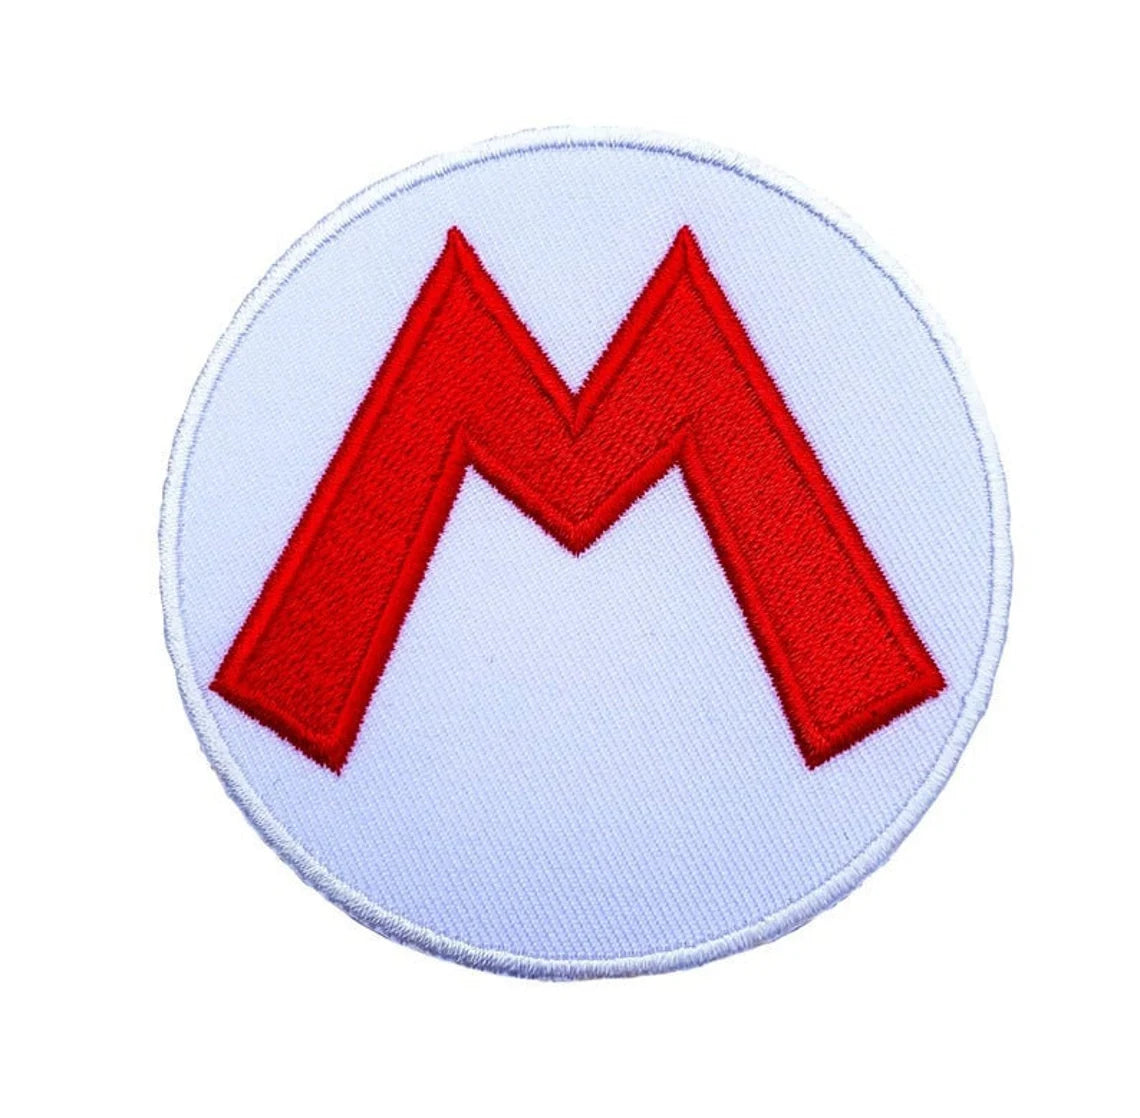 Super Mario : Embroidered Cartoon Iron Patch /iron Patch for Clothes  nintendo, Ds,luigi, Princess Peach, Tod -  Denmark